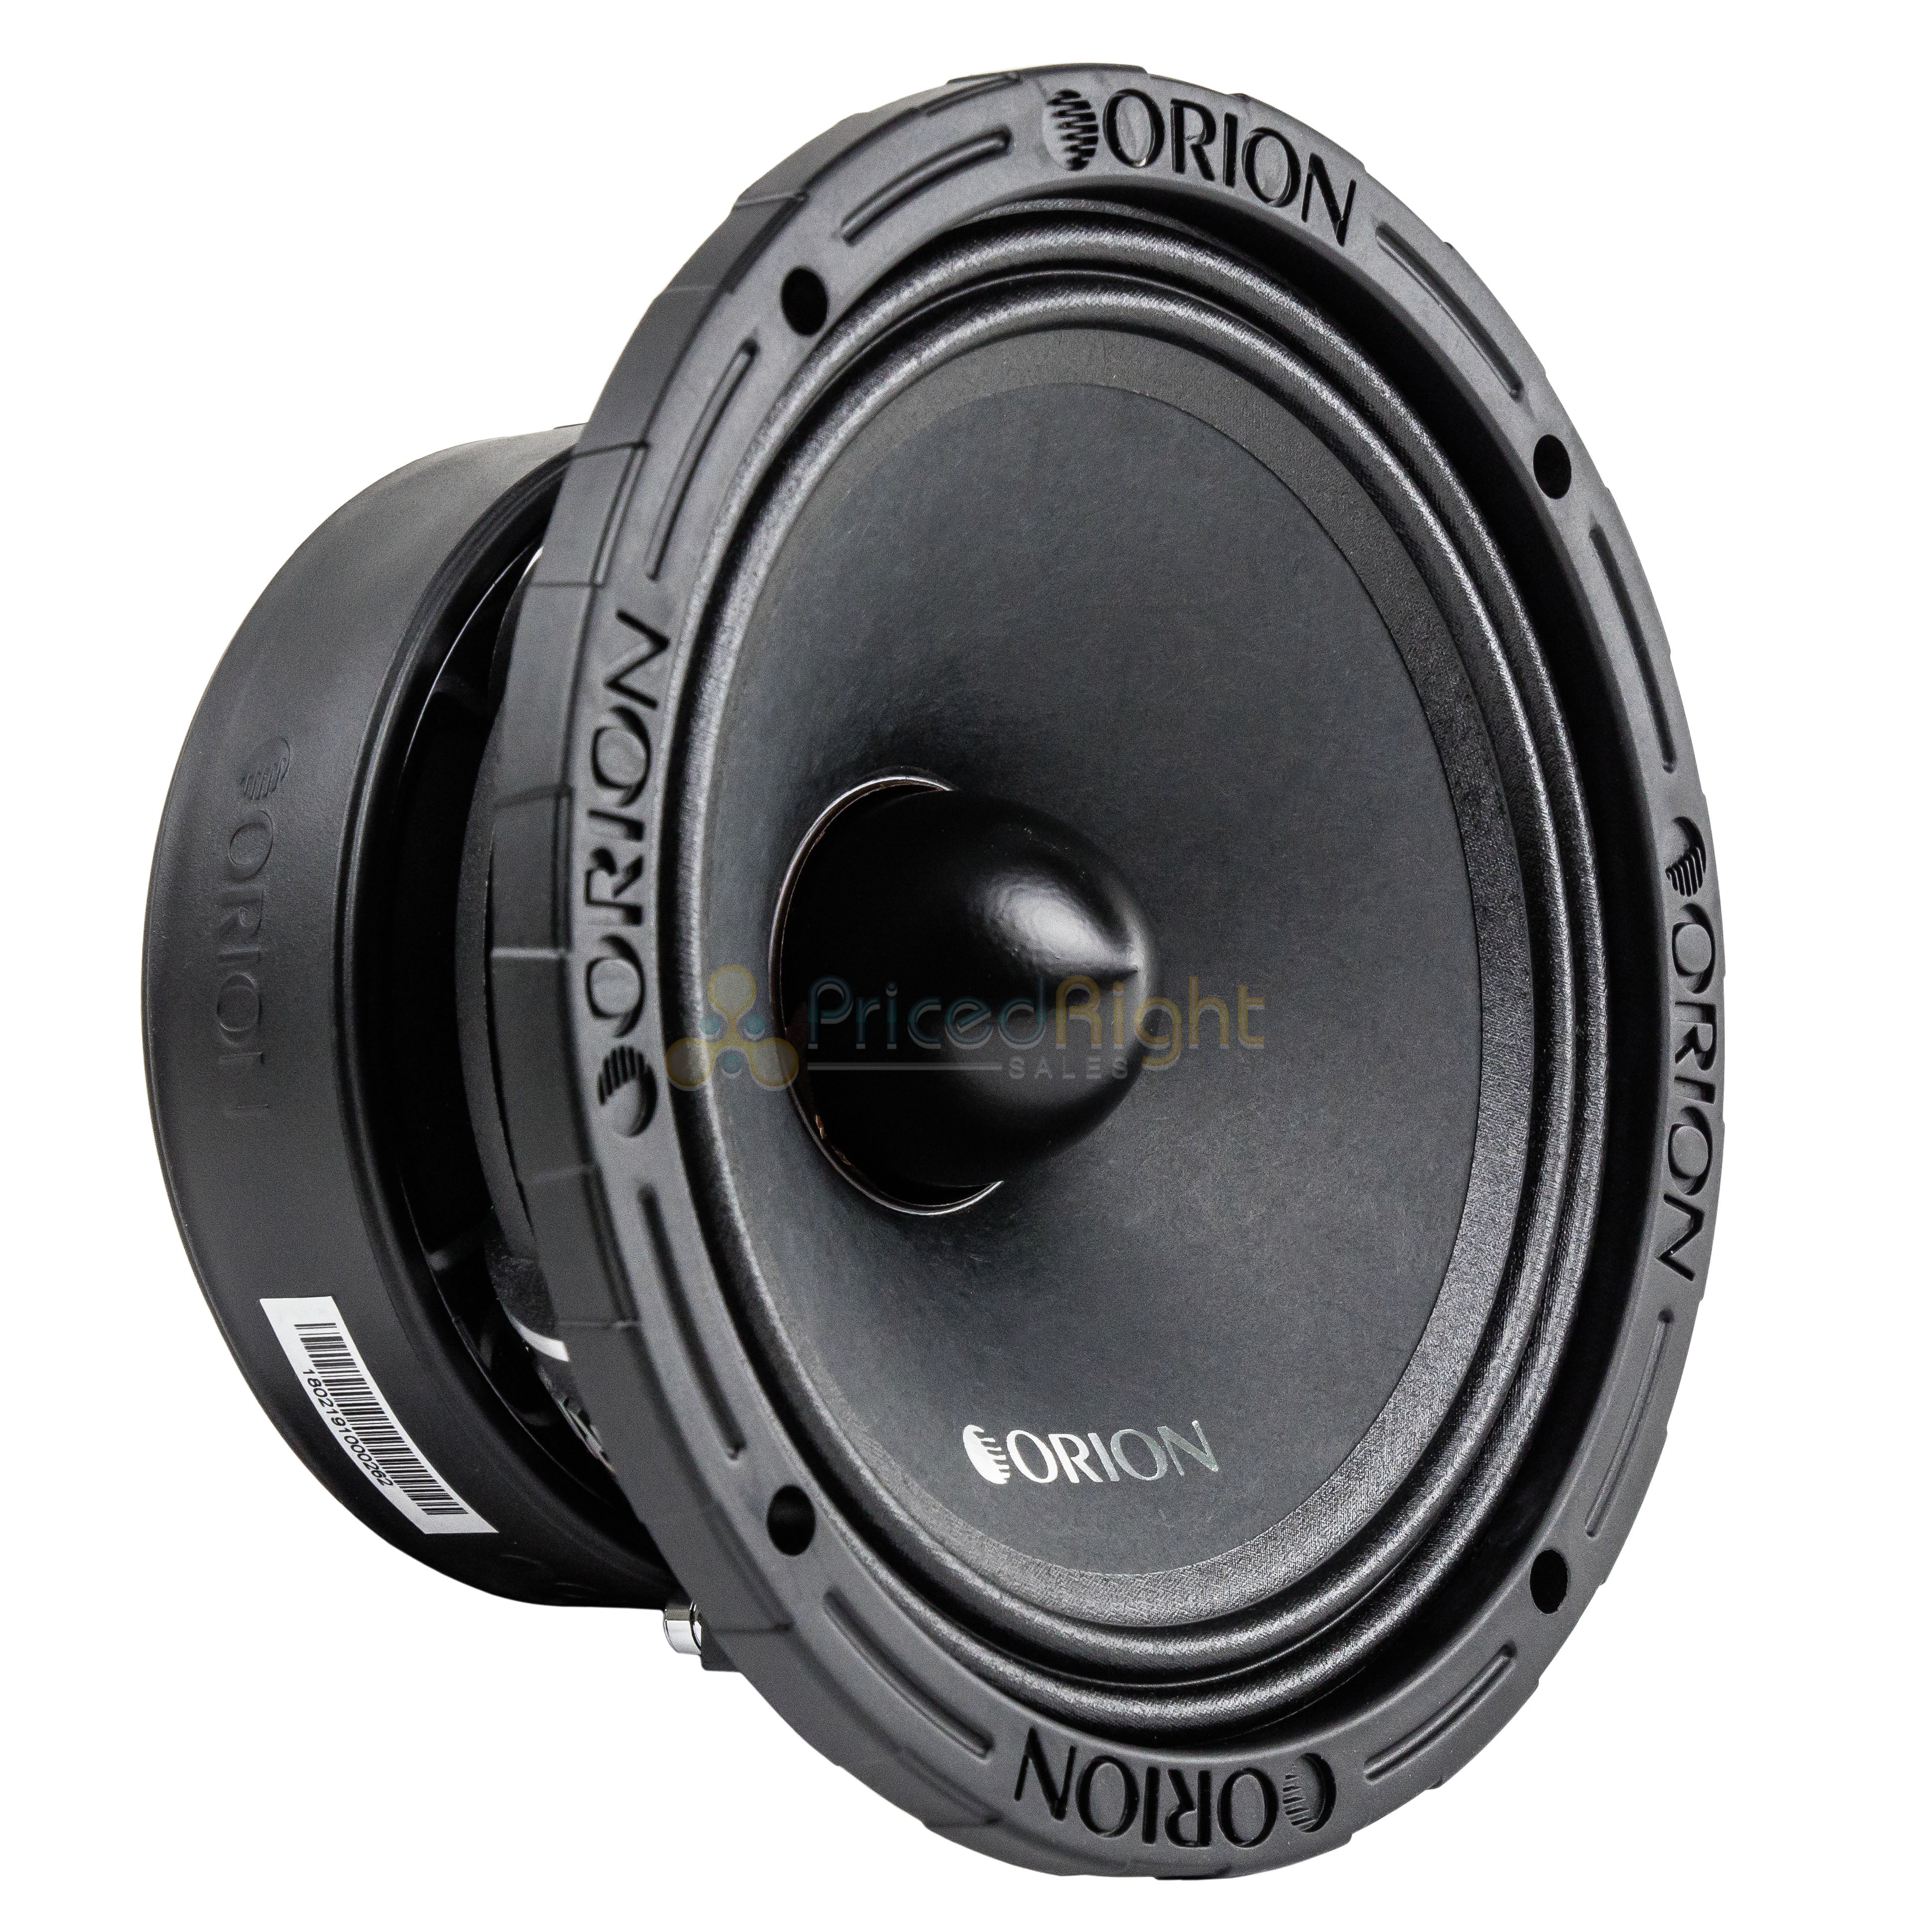 Orion 8" Midrange Speakers 1600 Watts Max Power 8 Ohm Car Audio XTX858 Pair